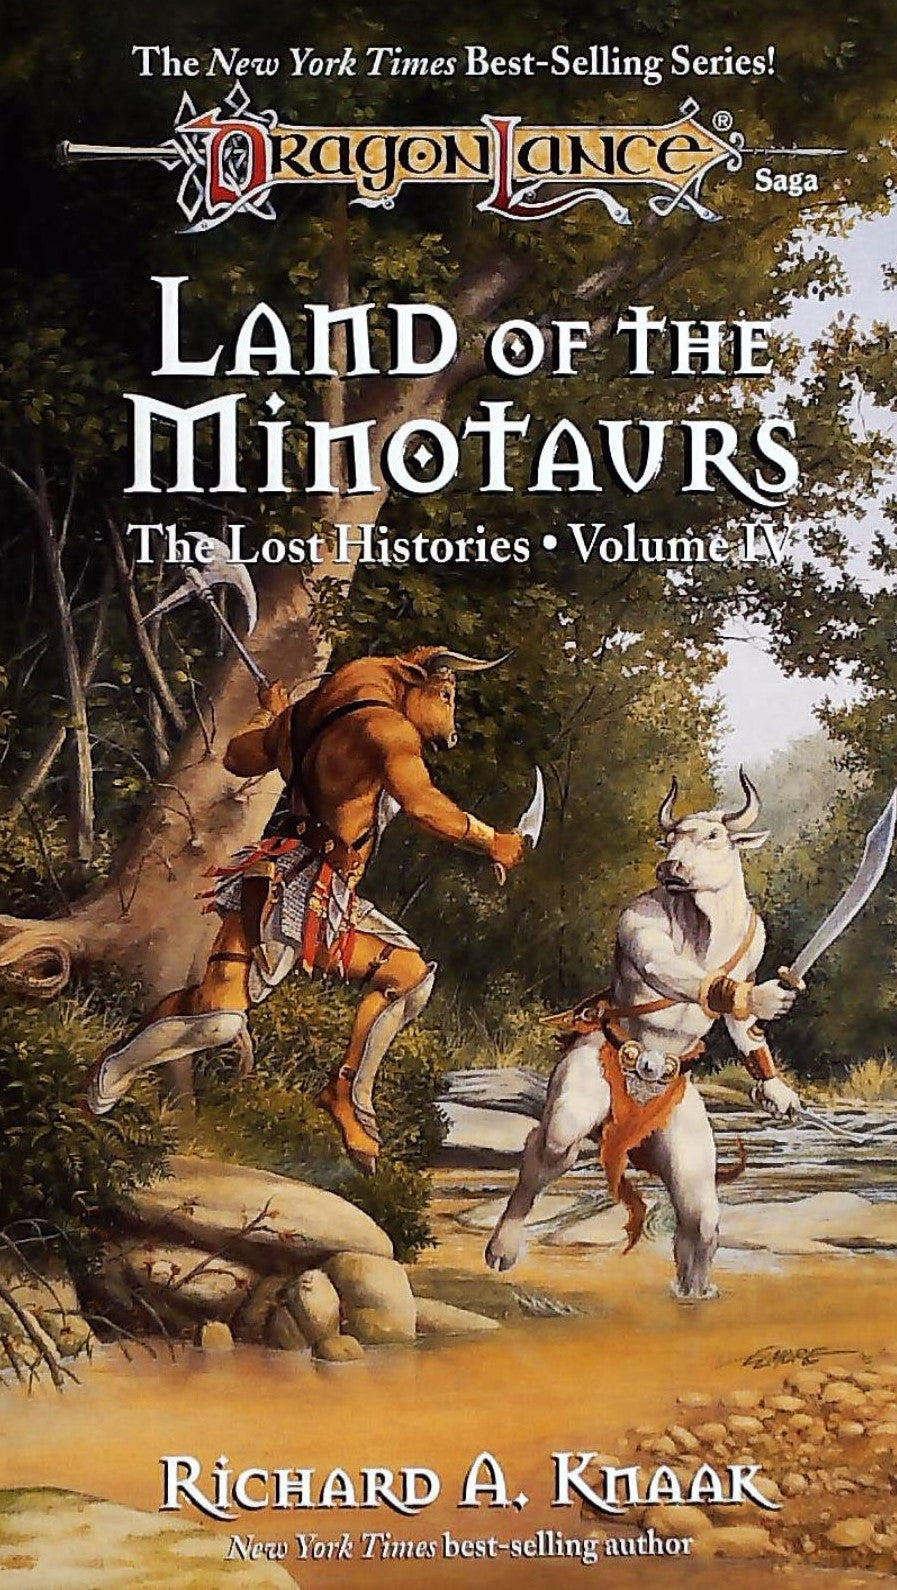 Livre ISBN 0786904720 DragonLance : The Lost Histories # 4 : Land of the Minotaurs (Richard A. Knaak)